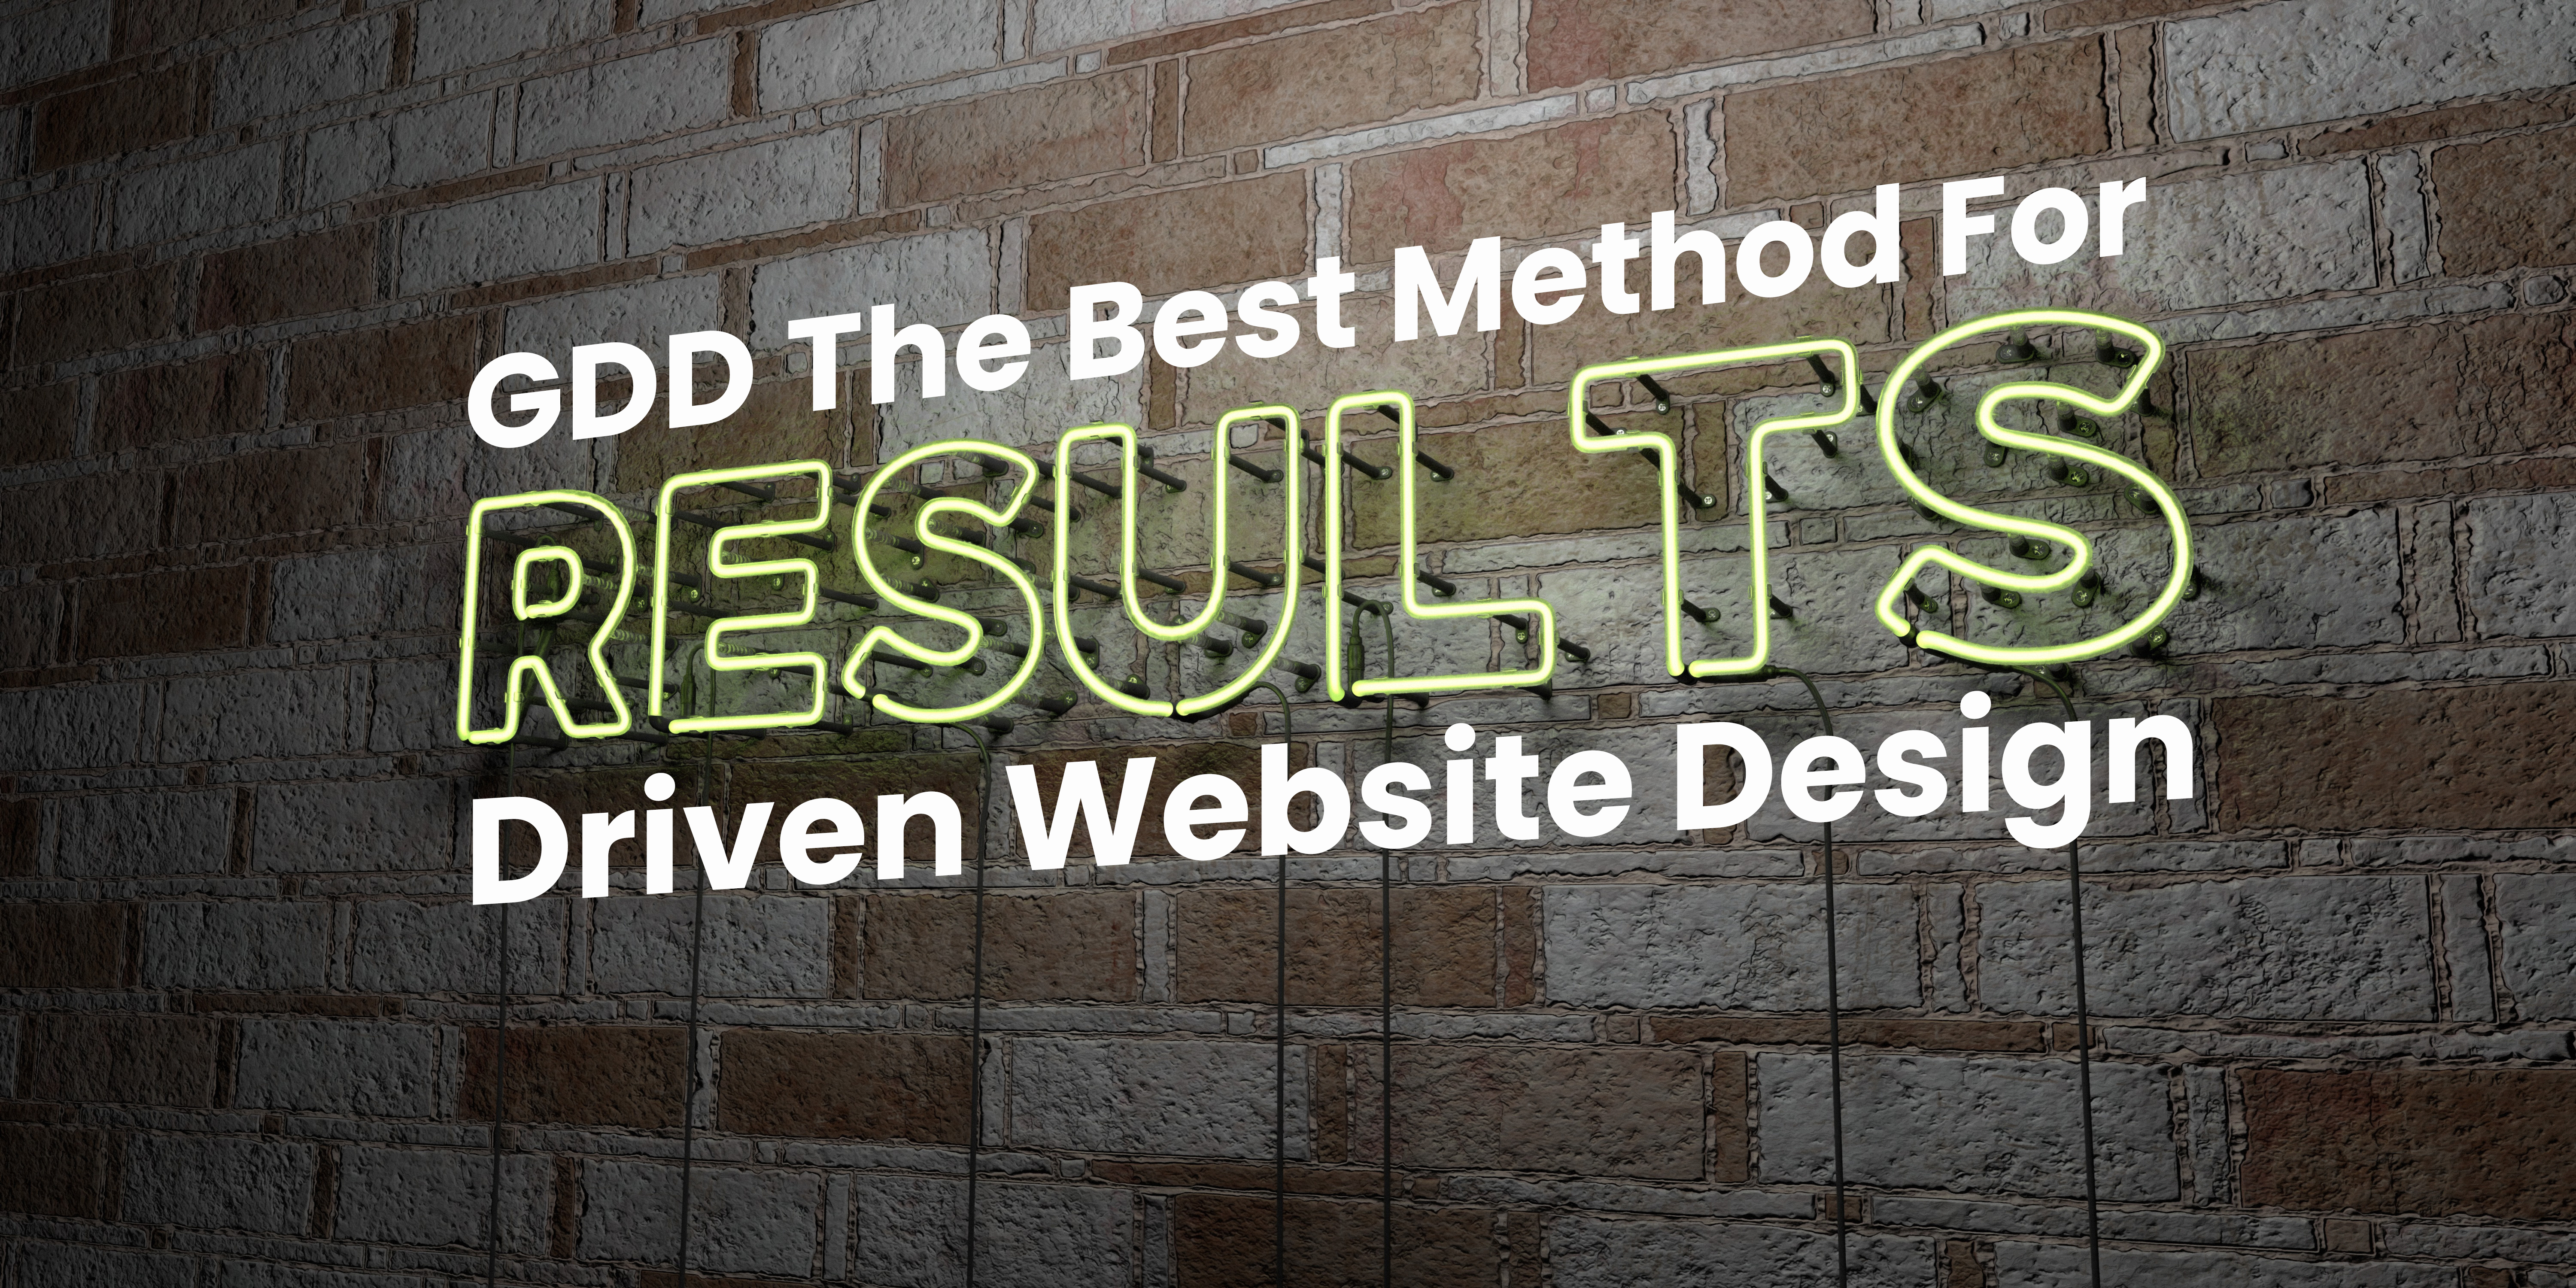 GDD Hands Down the Best Method For Results-Driven Website Design